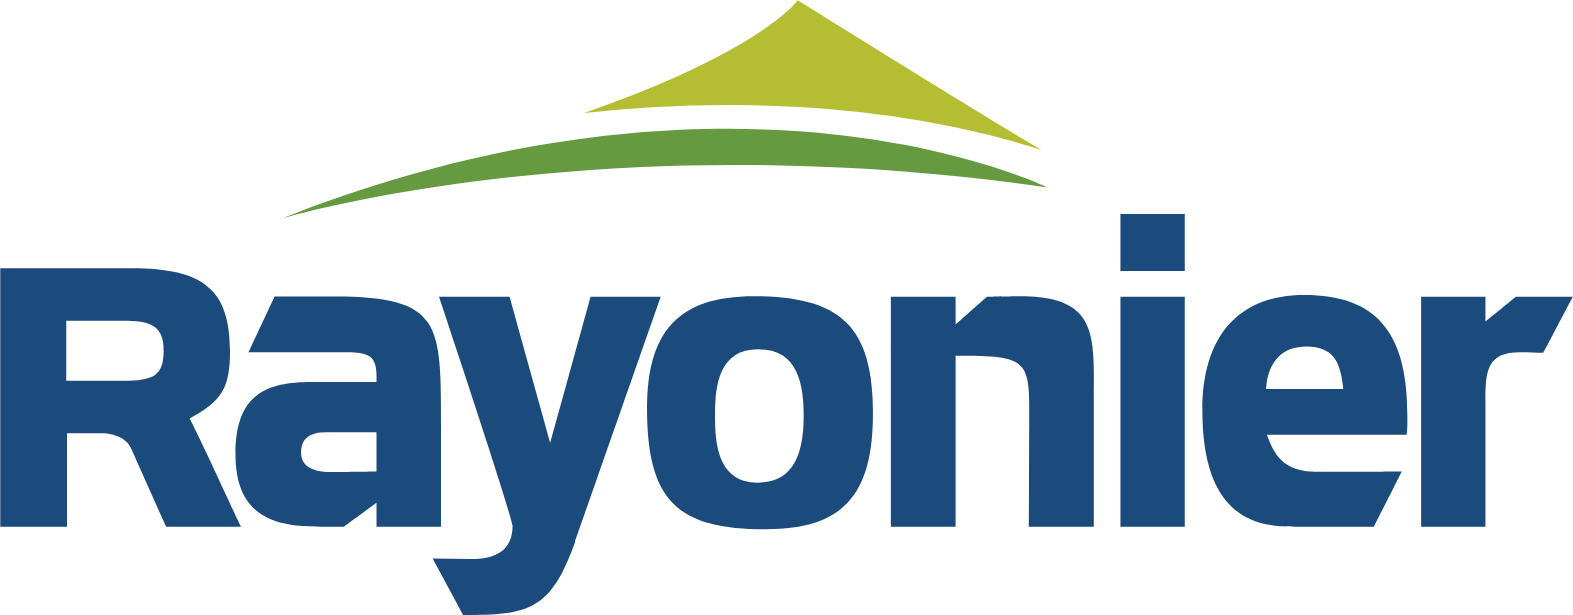 Rayonier logo large (transparent PNG)